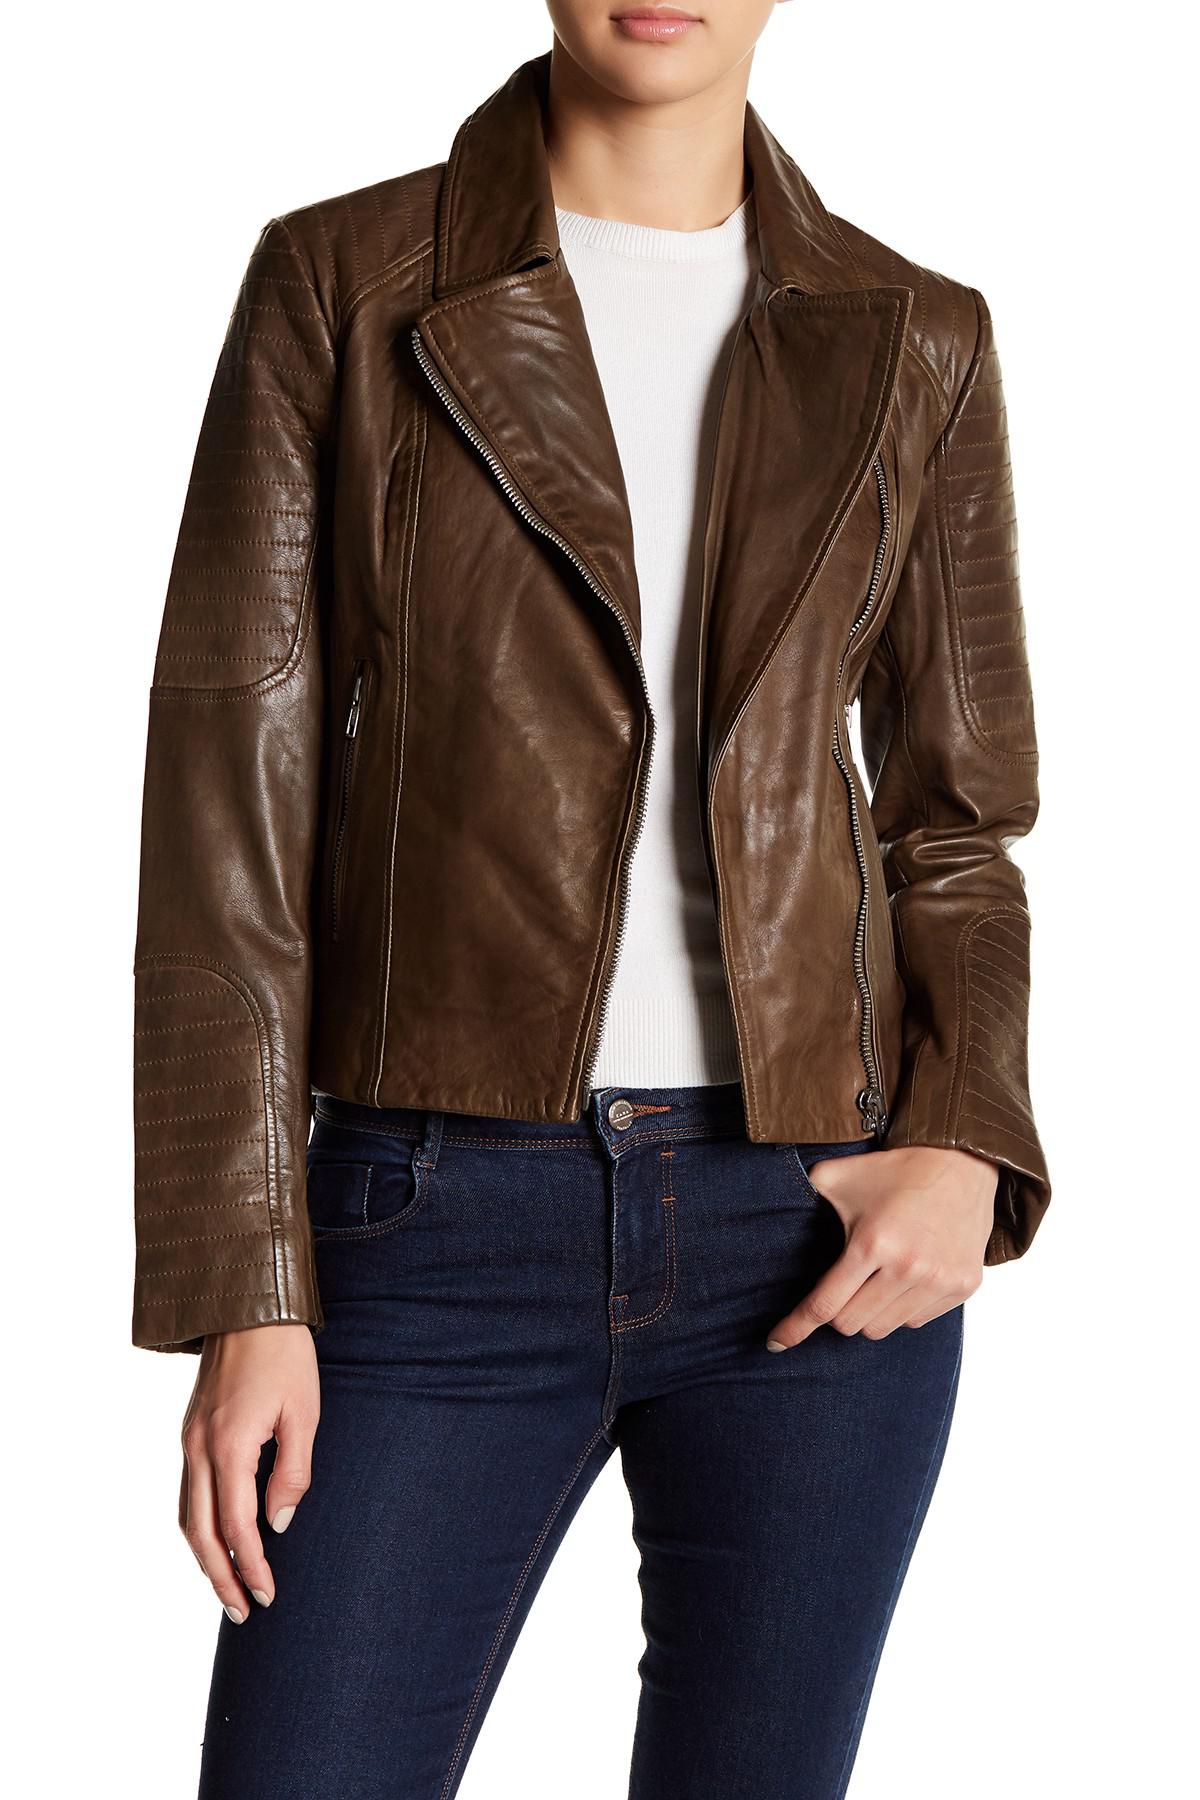 BB Dakota Leather Side Zip Moto Jacket in Army Green (Brown) - Lyst